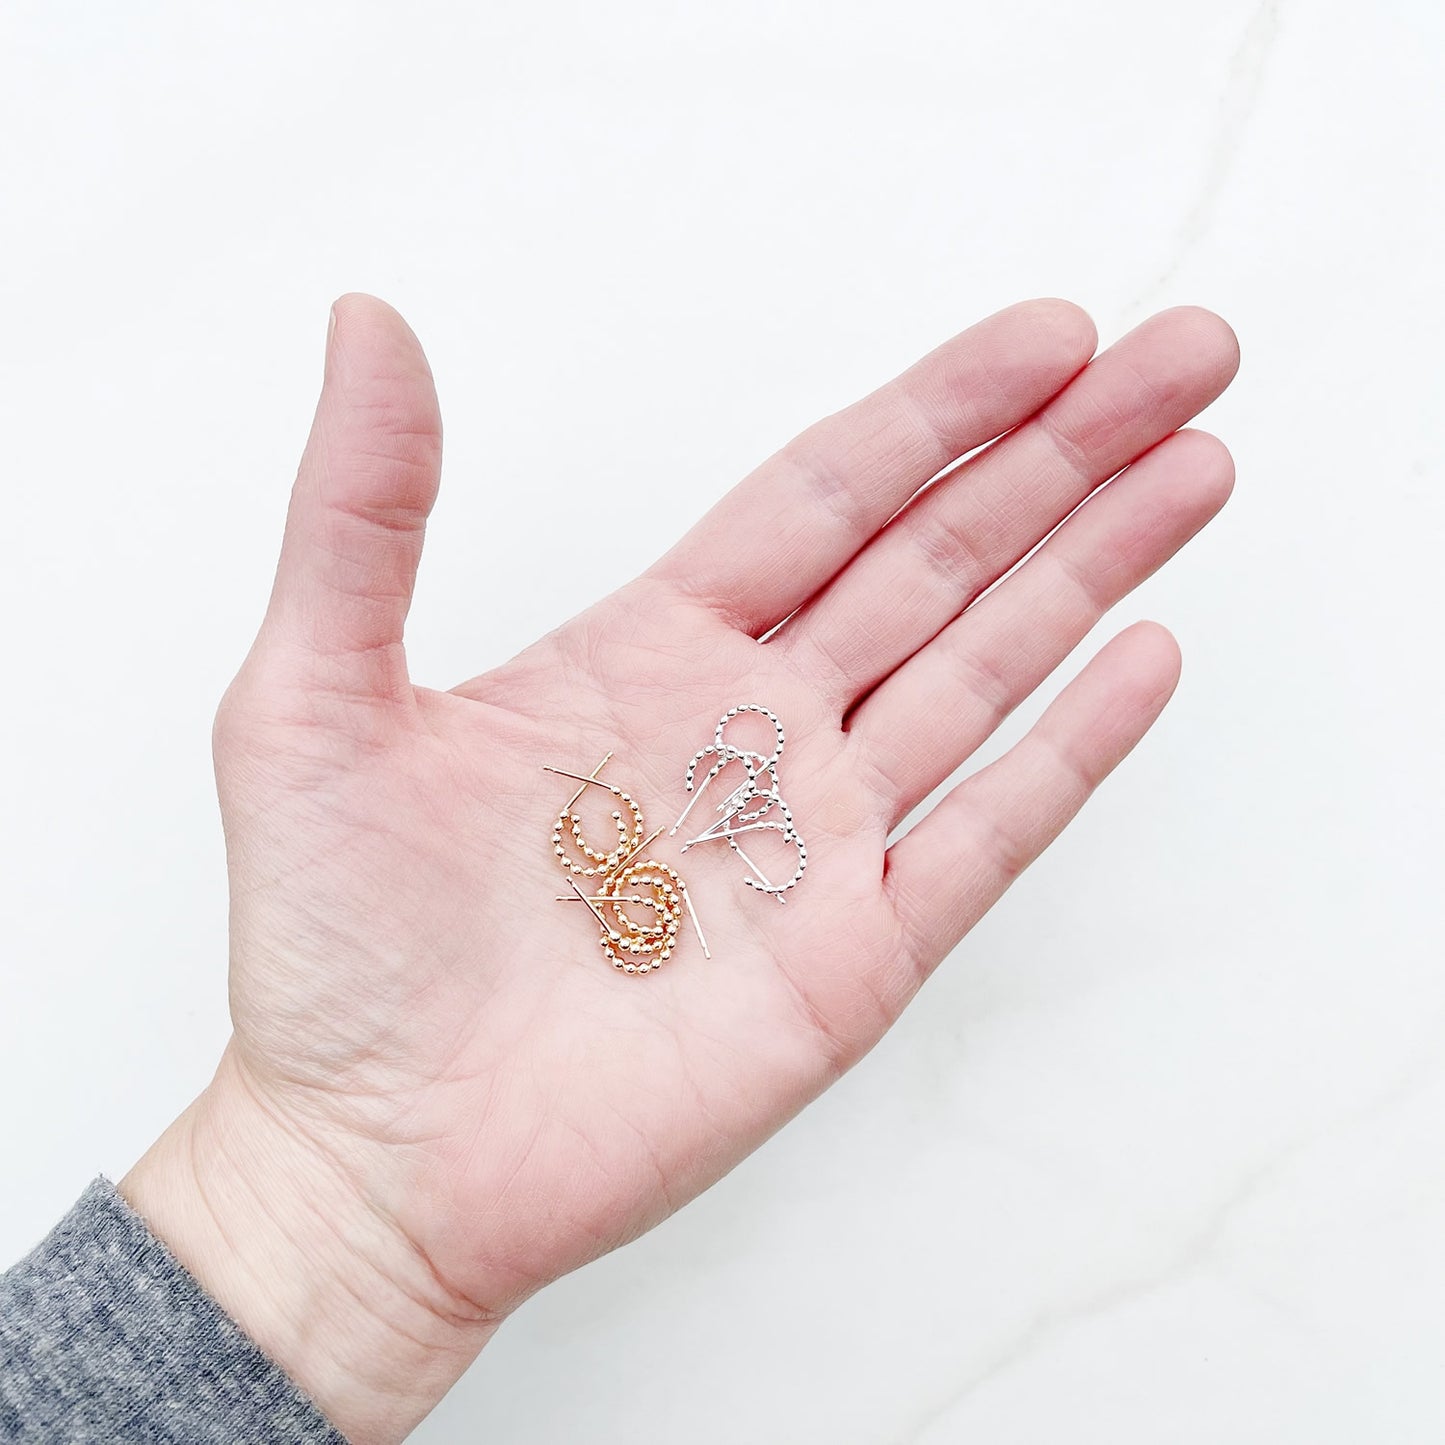 tiny beaded hoop earrings | everyday earrings in sterling silver or 14k gold fill